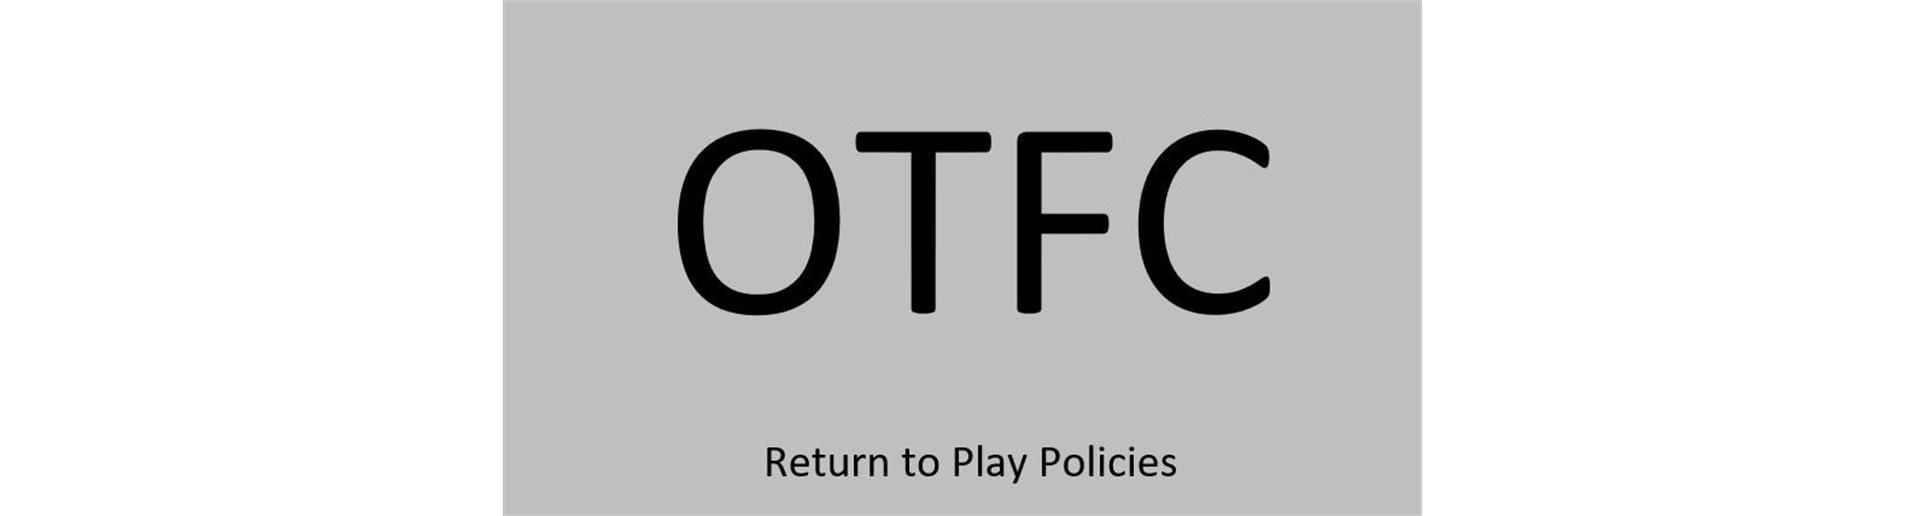 OTFC Return to Play